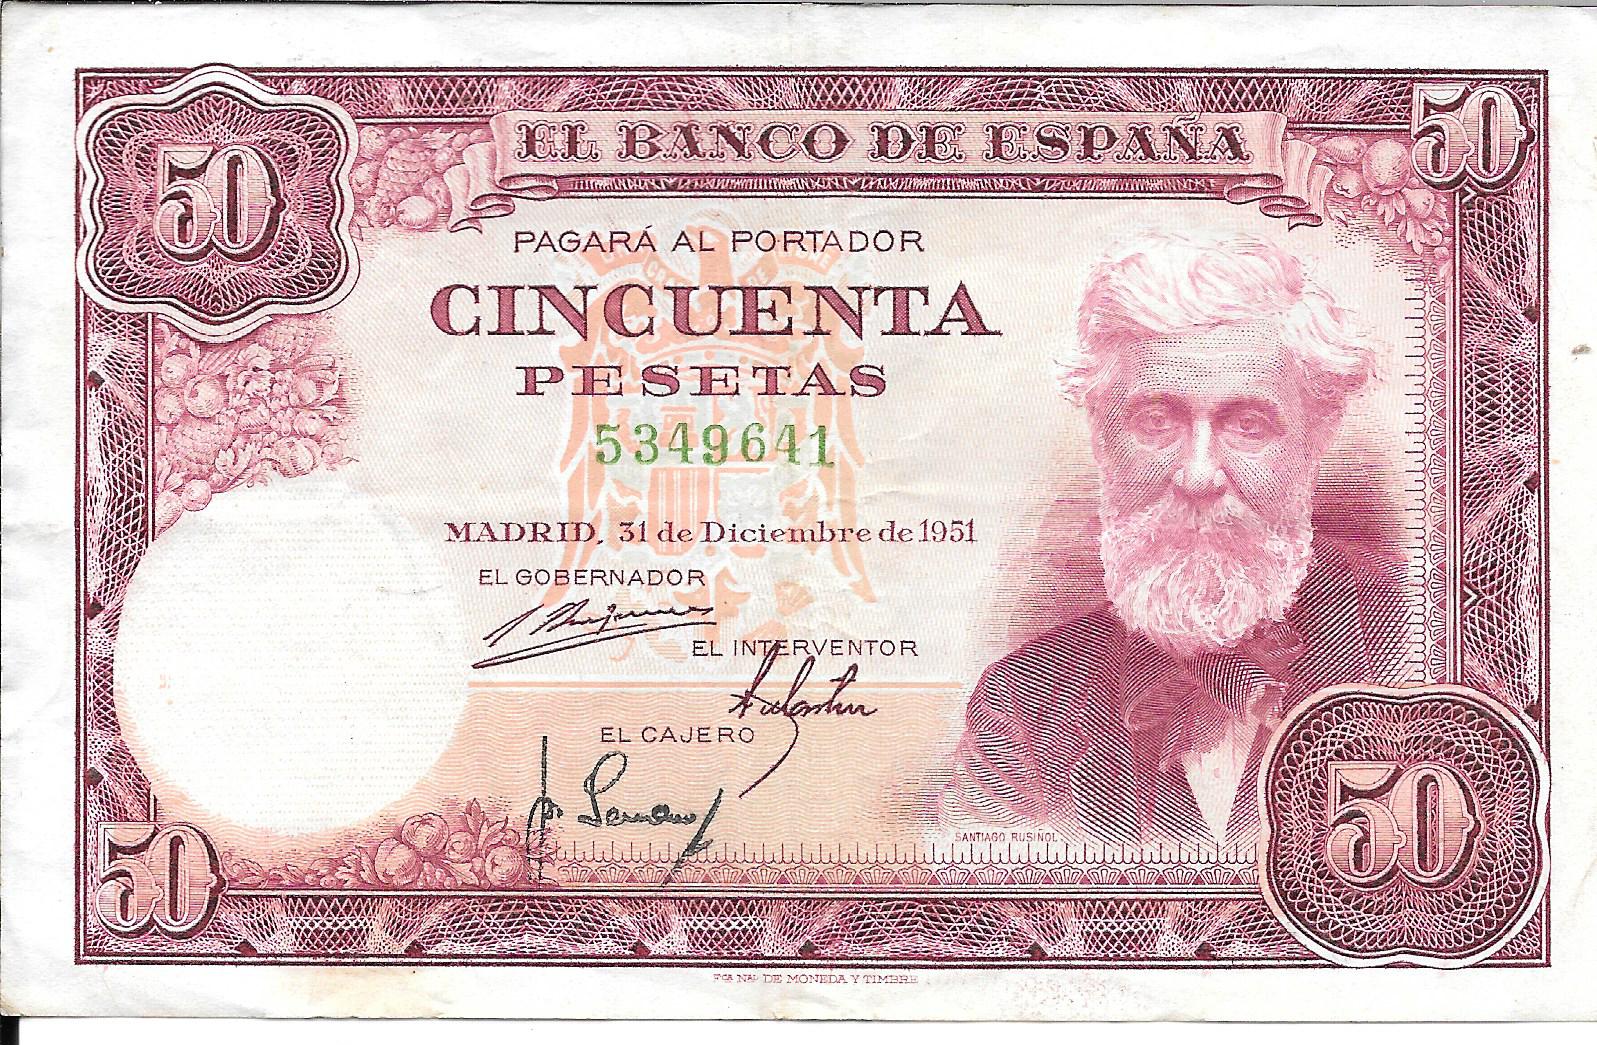 Billetes - EspaÃ±a - Estado EspaÃ±ol (1936 - 1975) - 50 ptas - 482 - mbc - 1951 - Num.ref: 5349641 - sin serie